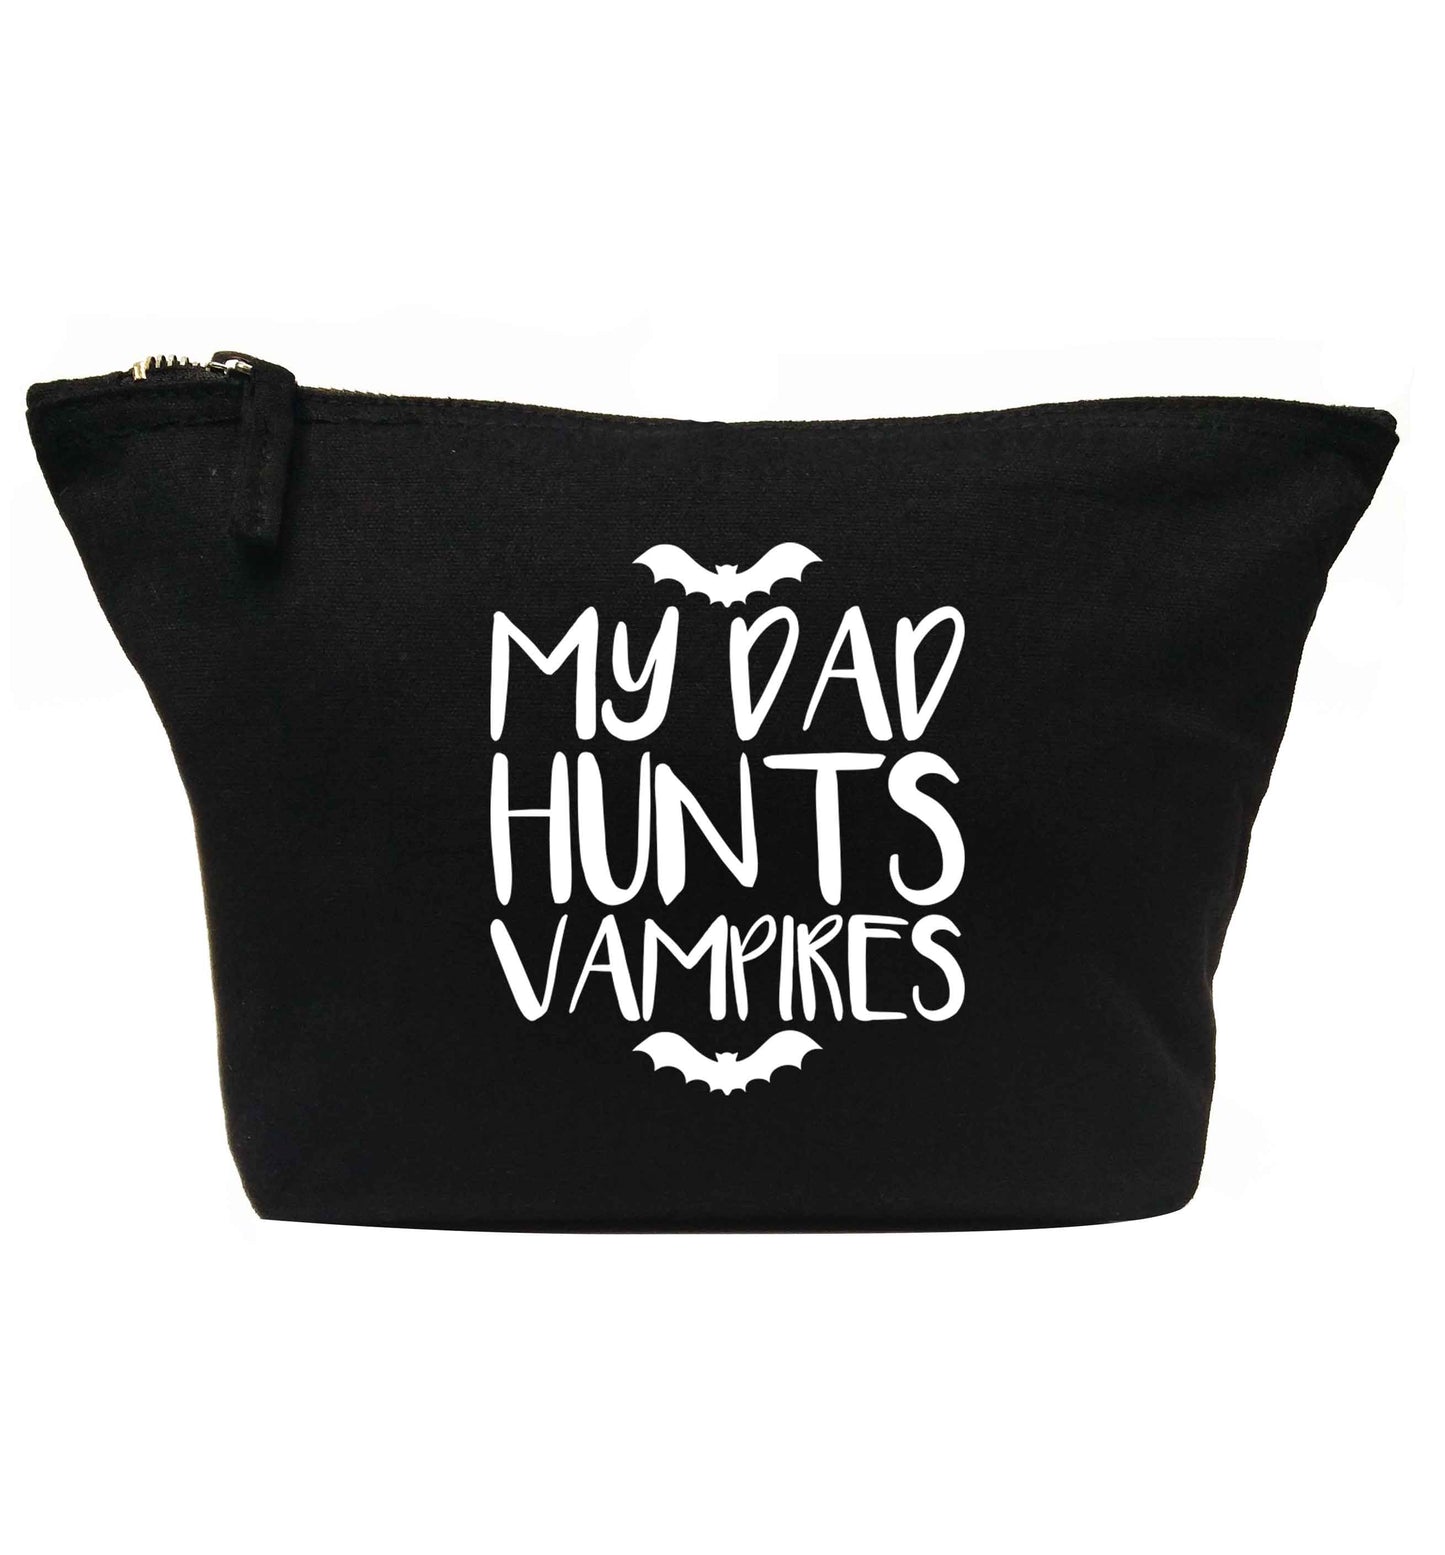 My dad hunts vampires | Makeup / wash bag